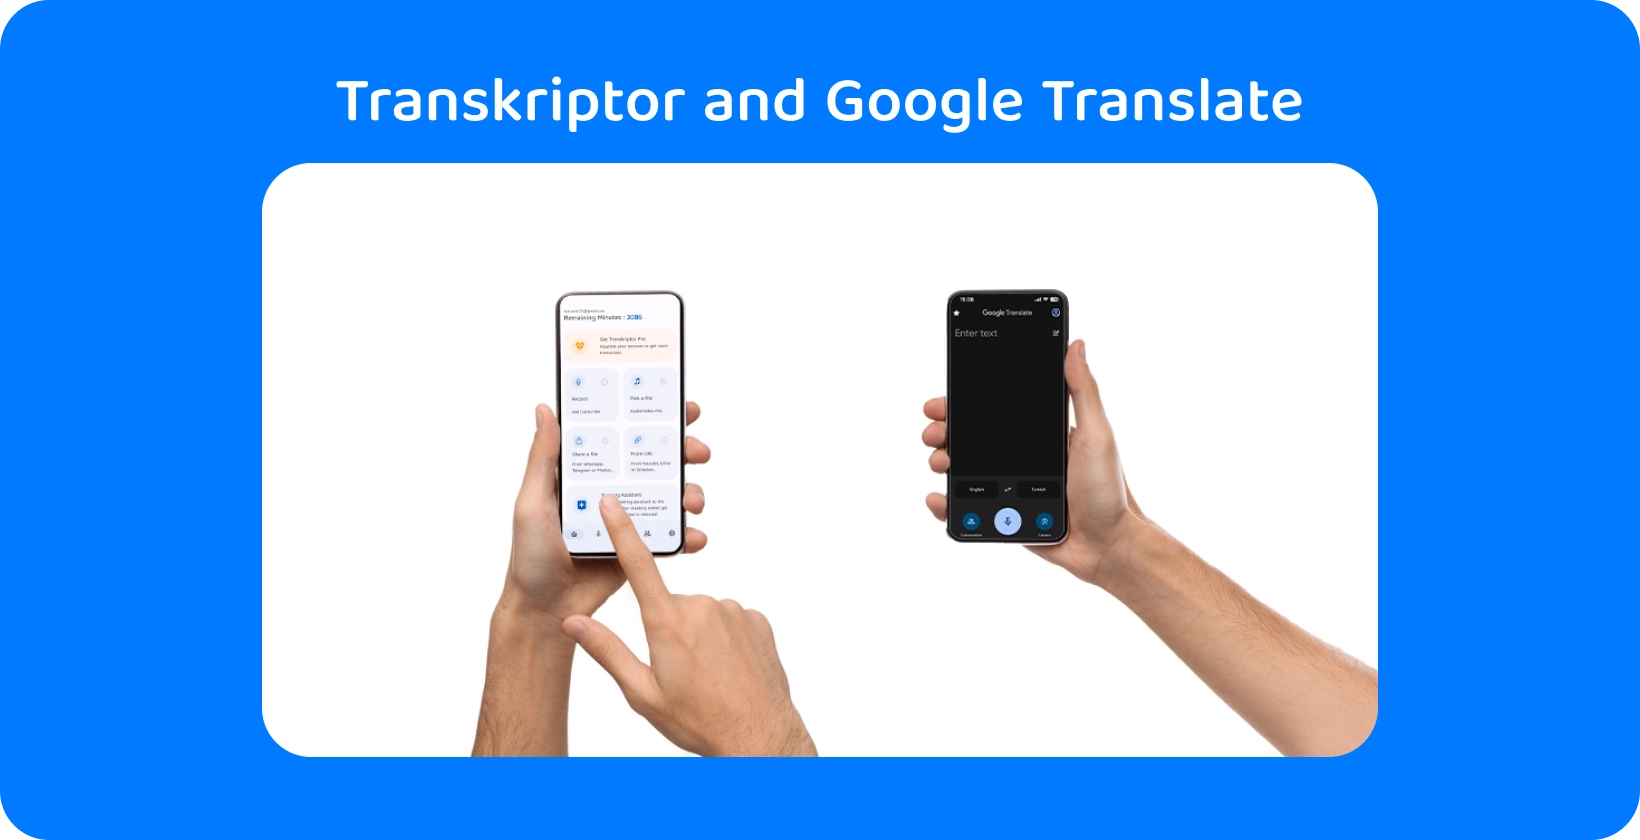 Dua tangan memegang telefon pintar dengan Transkriptor dan Google Terjemah, menunjukkan transkripsi audio dan terjemahan.